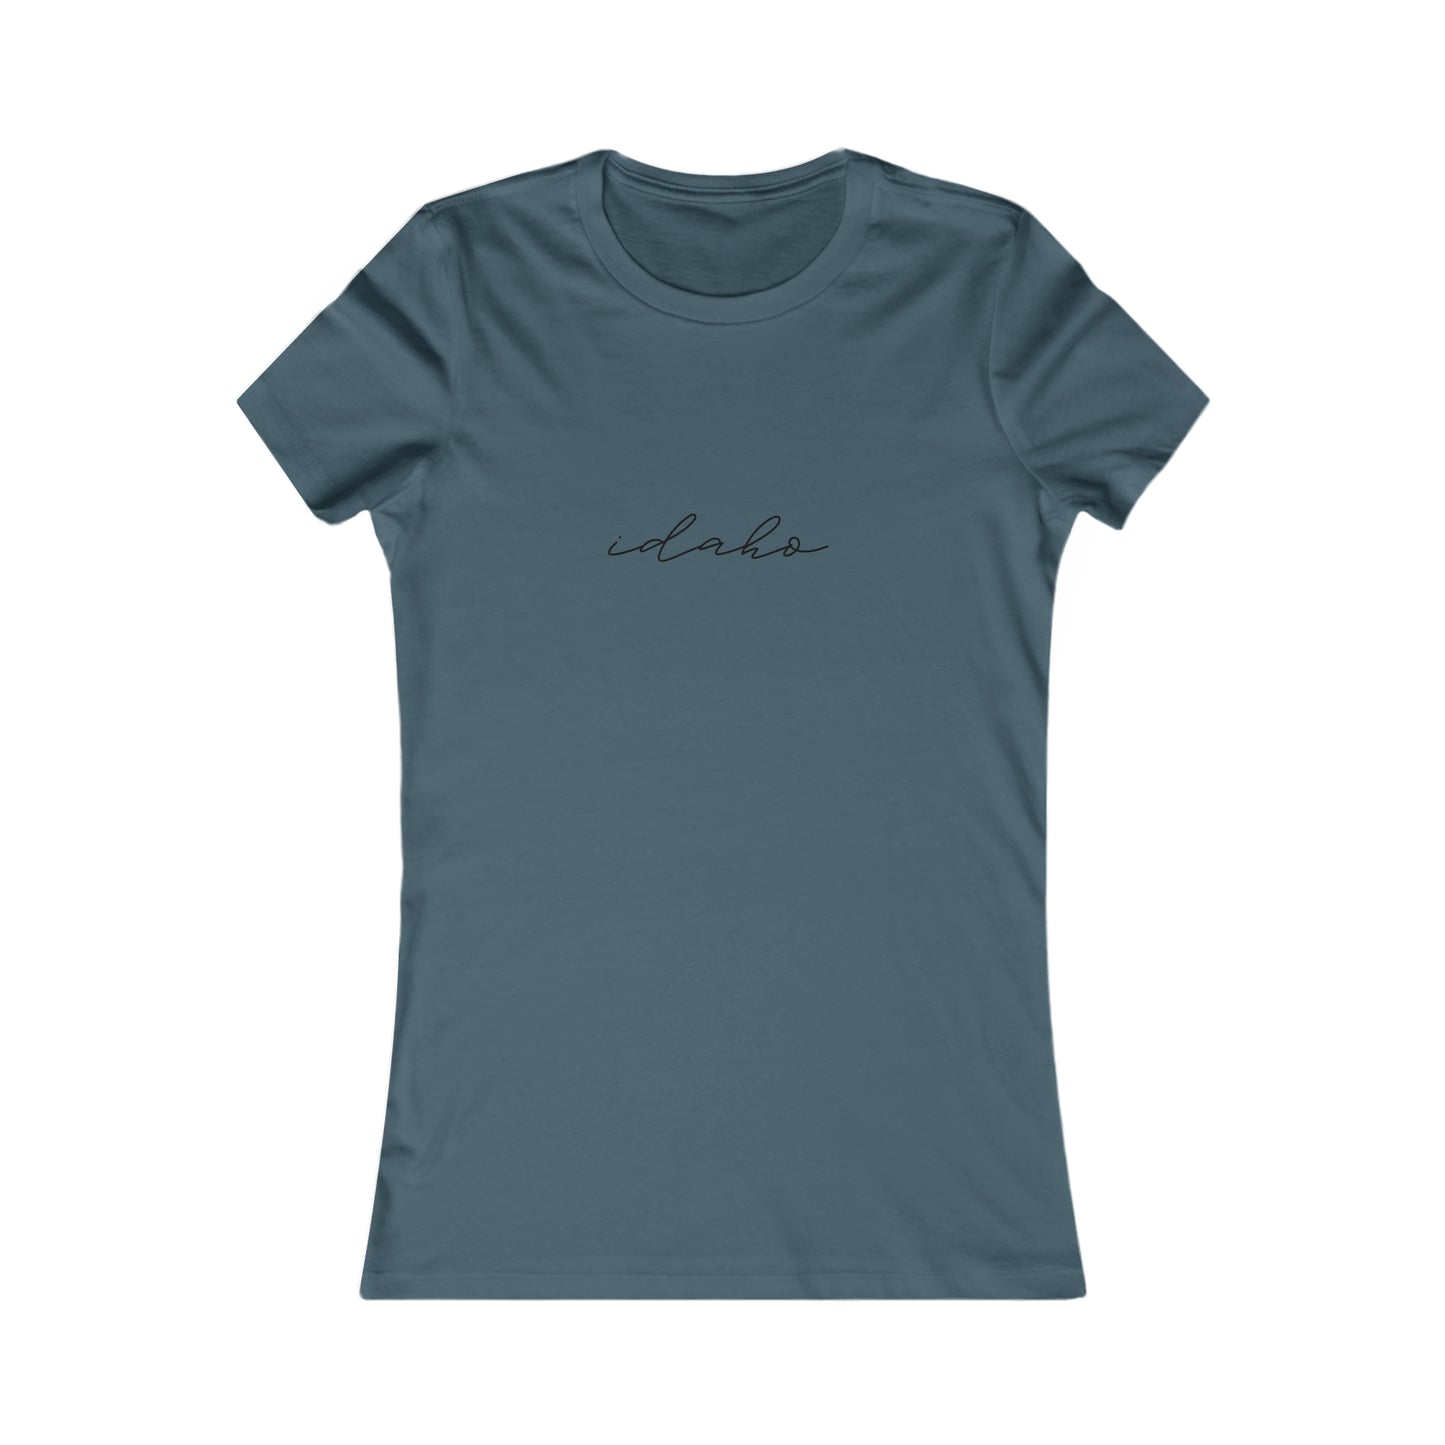 Idaho Cursive Women's Shirt